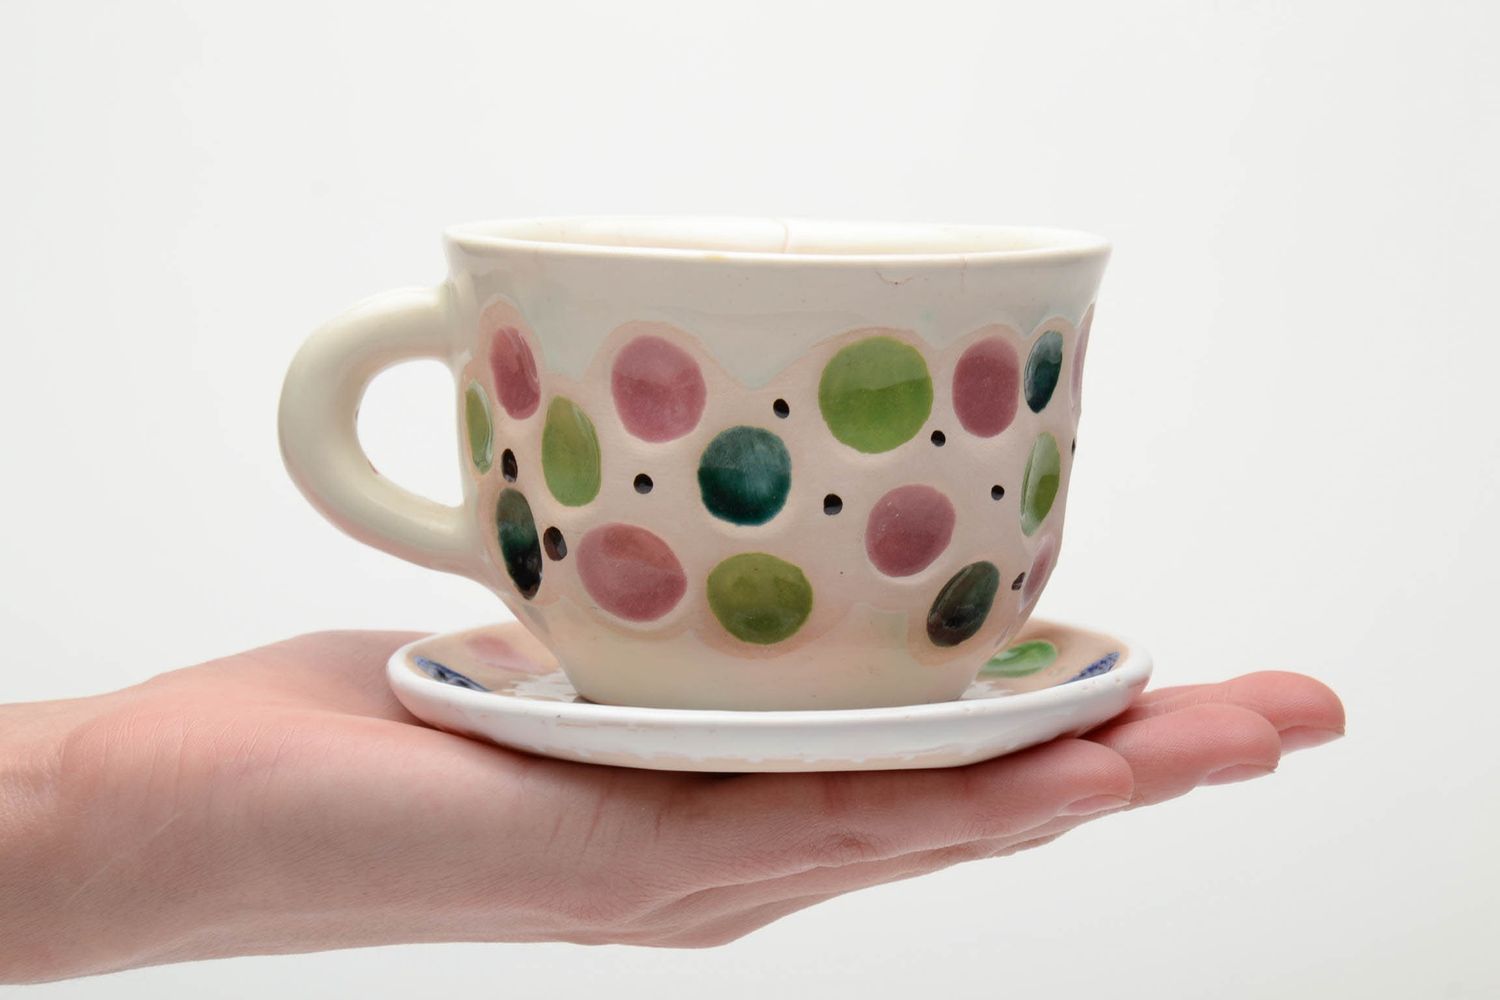  Espresso coffee ceramic cup and saucer 0,63 lb photo 5